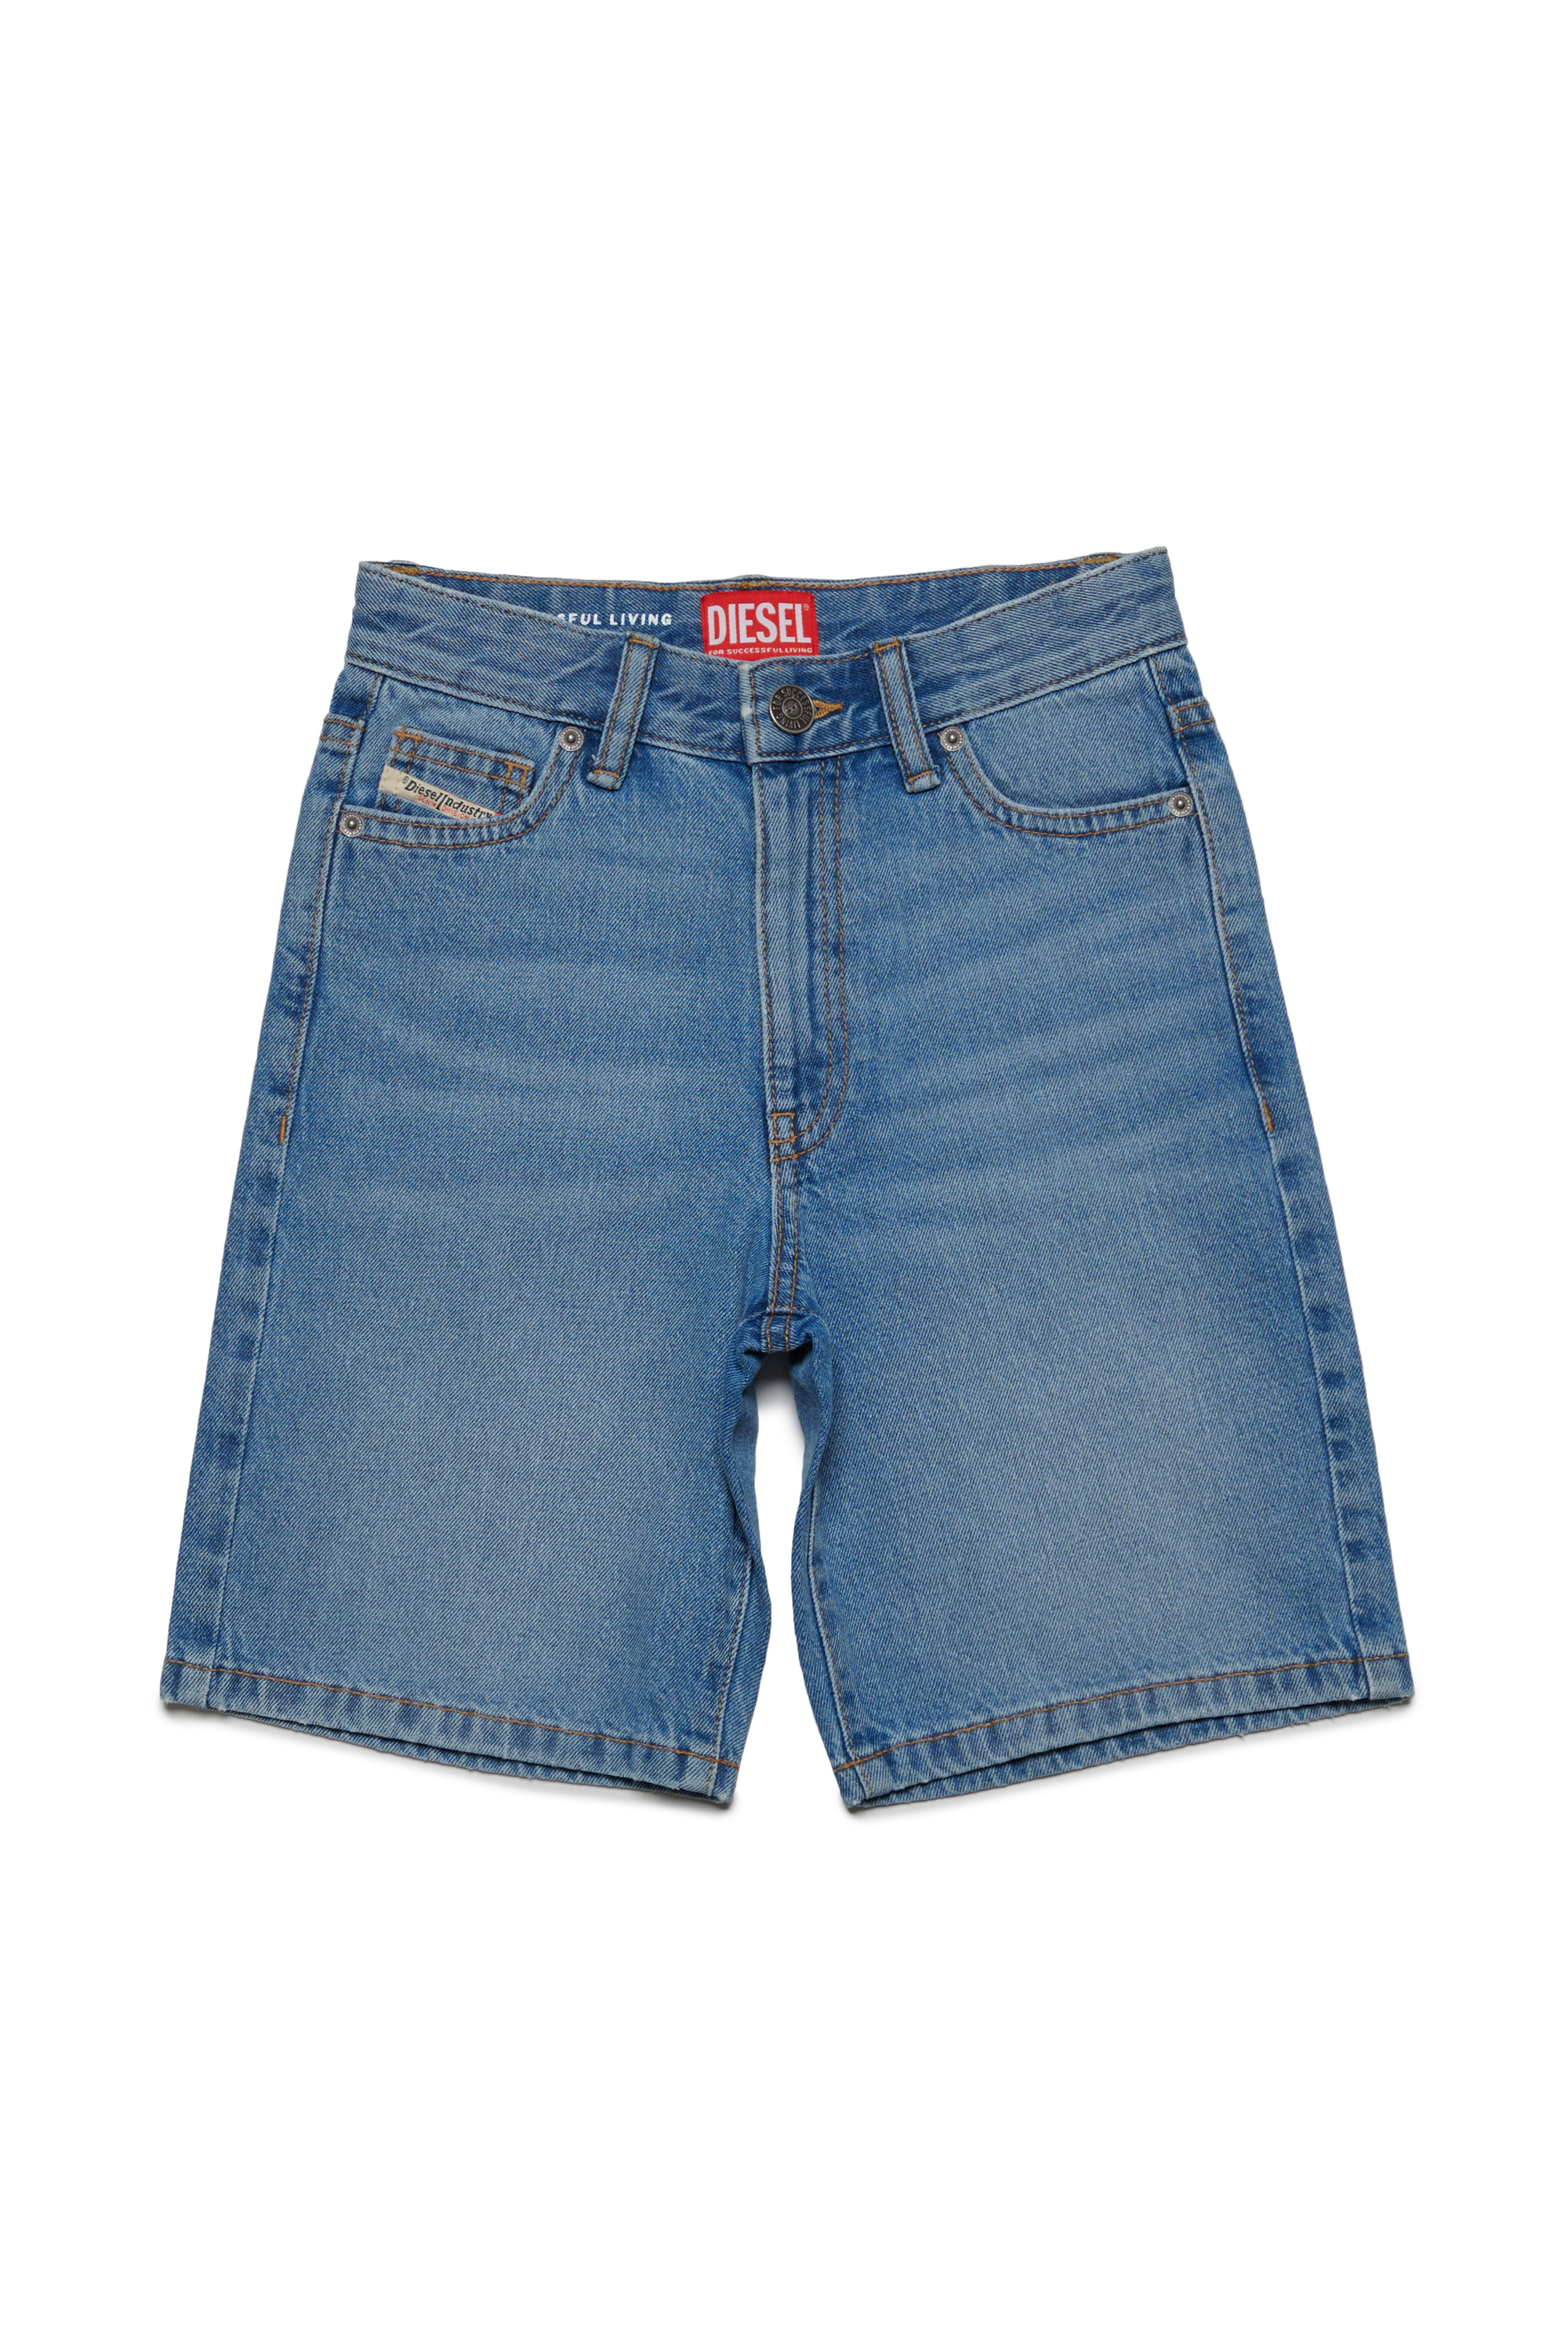 Diesel - D-MACS-SH-J, Man Bermuda shorts in denim in Blue - Image 1